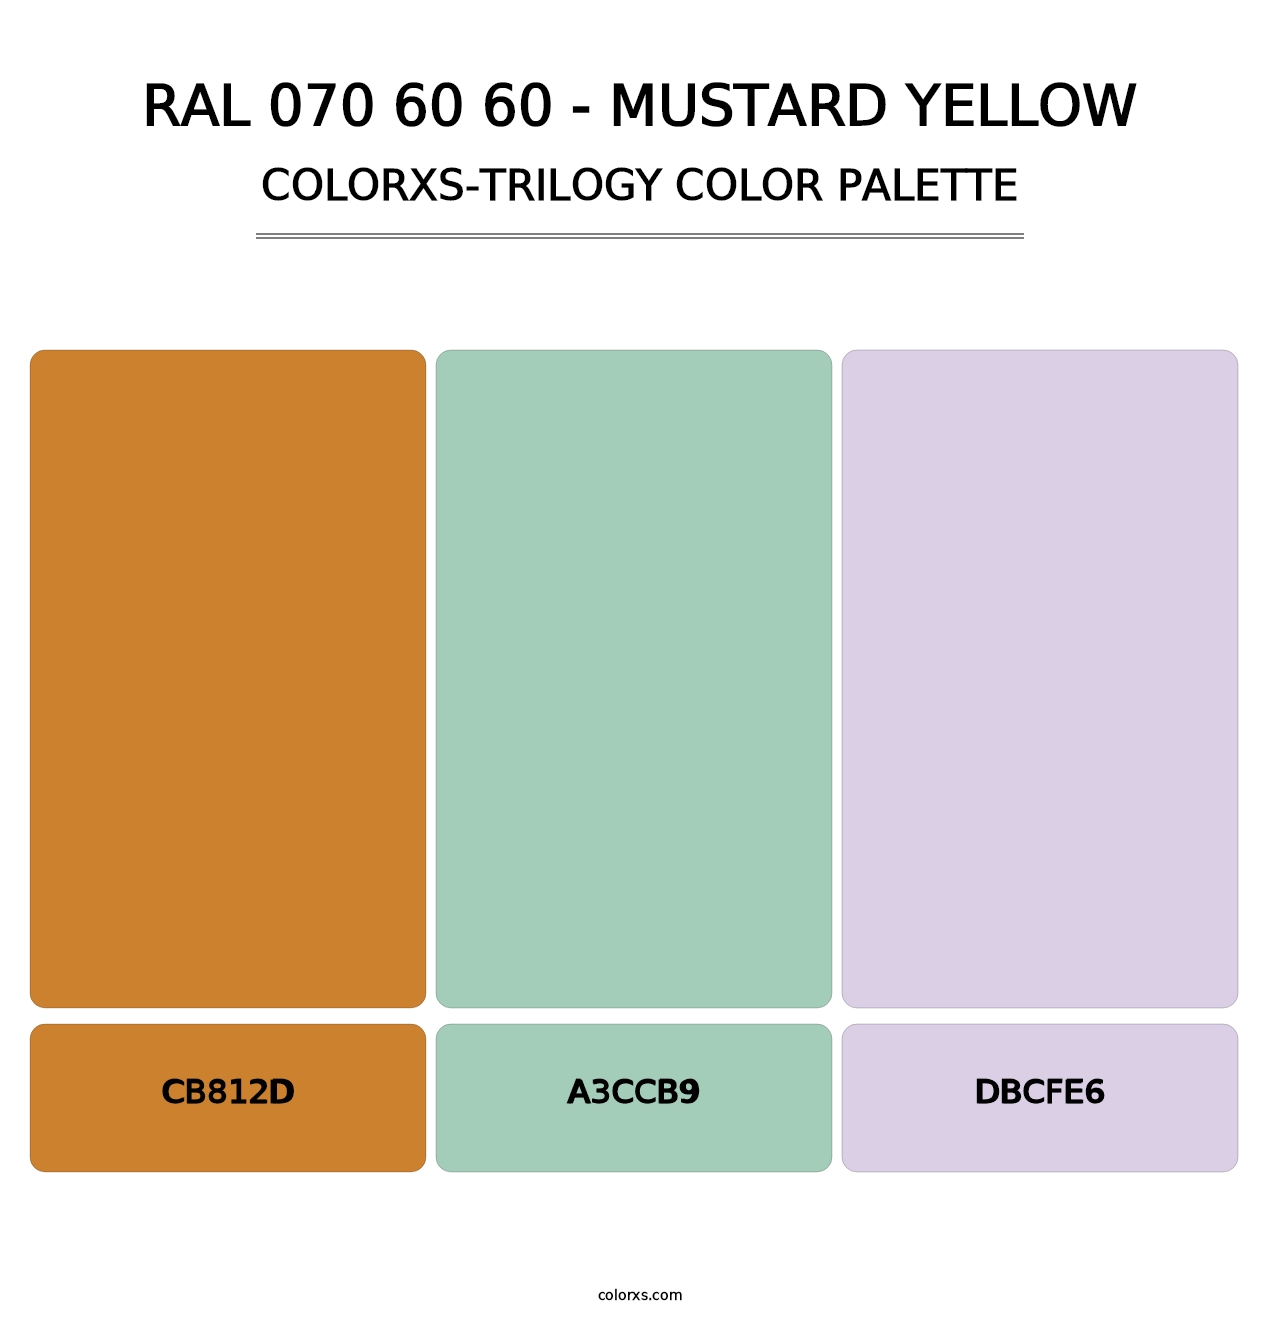 RAL 070 60 60 - Mustard Yellow - Colorxs Trilogy Palette